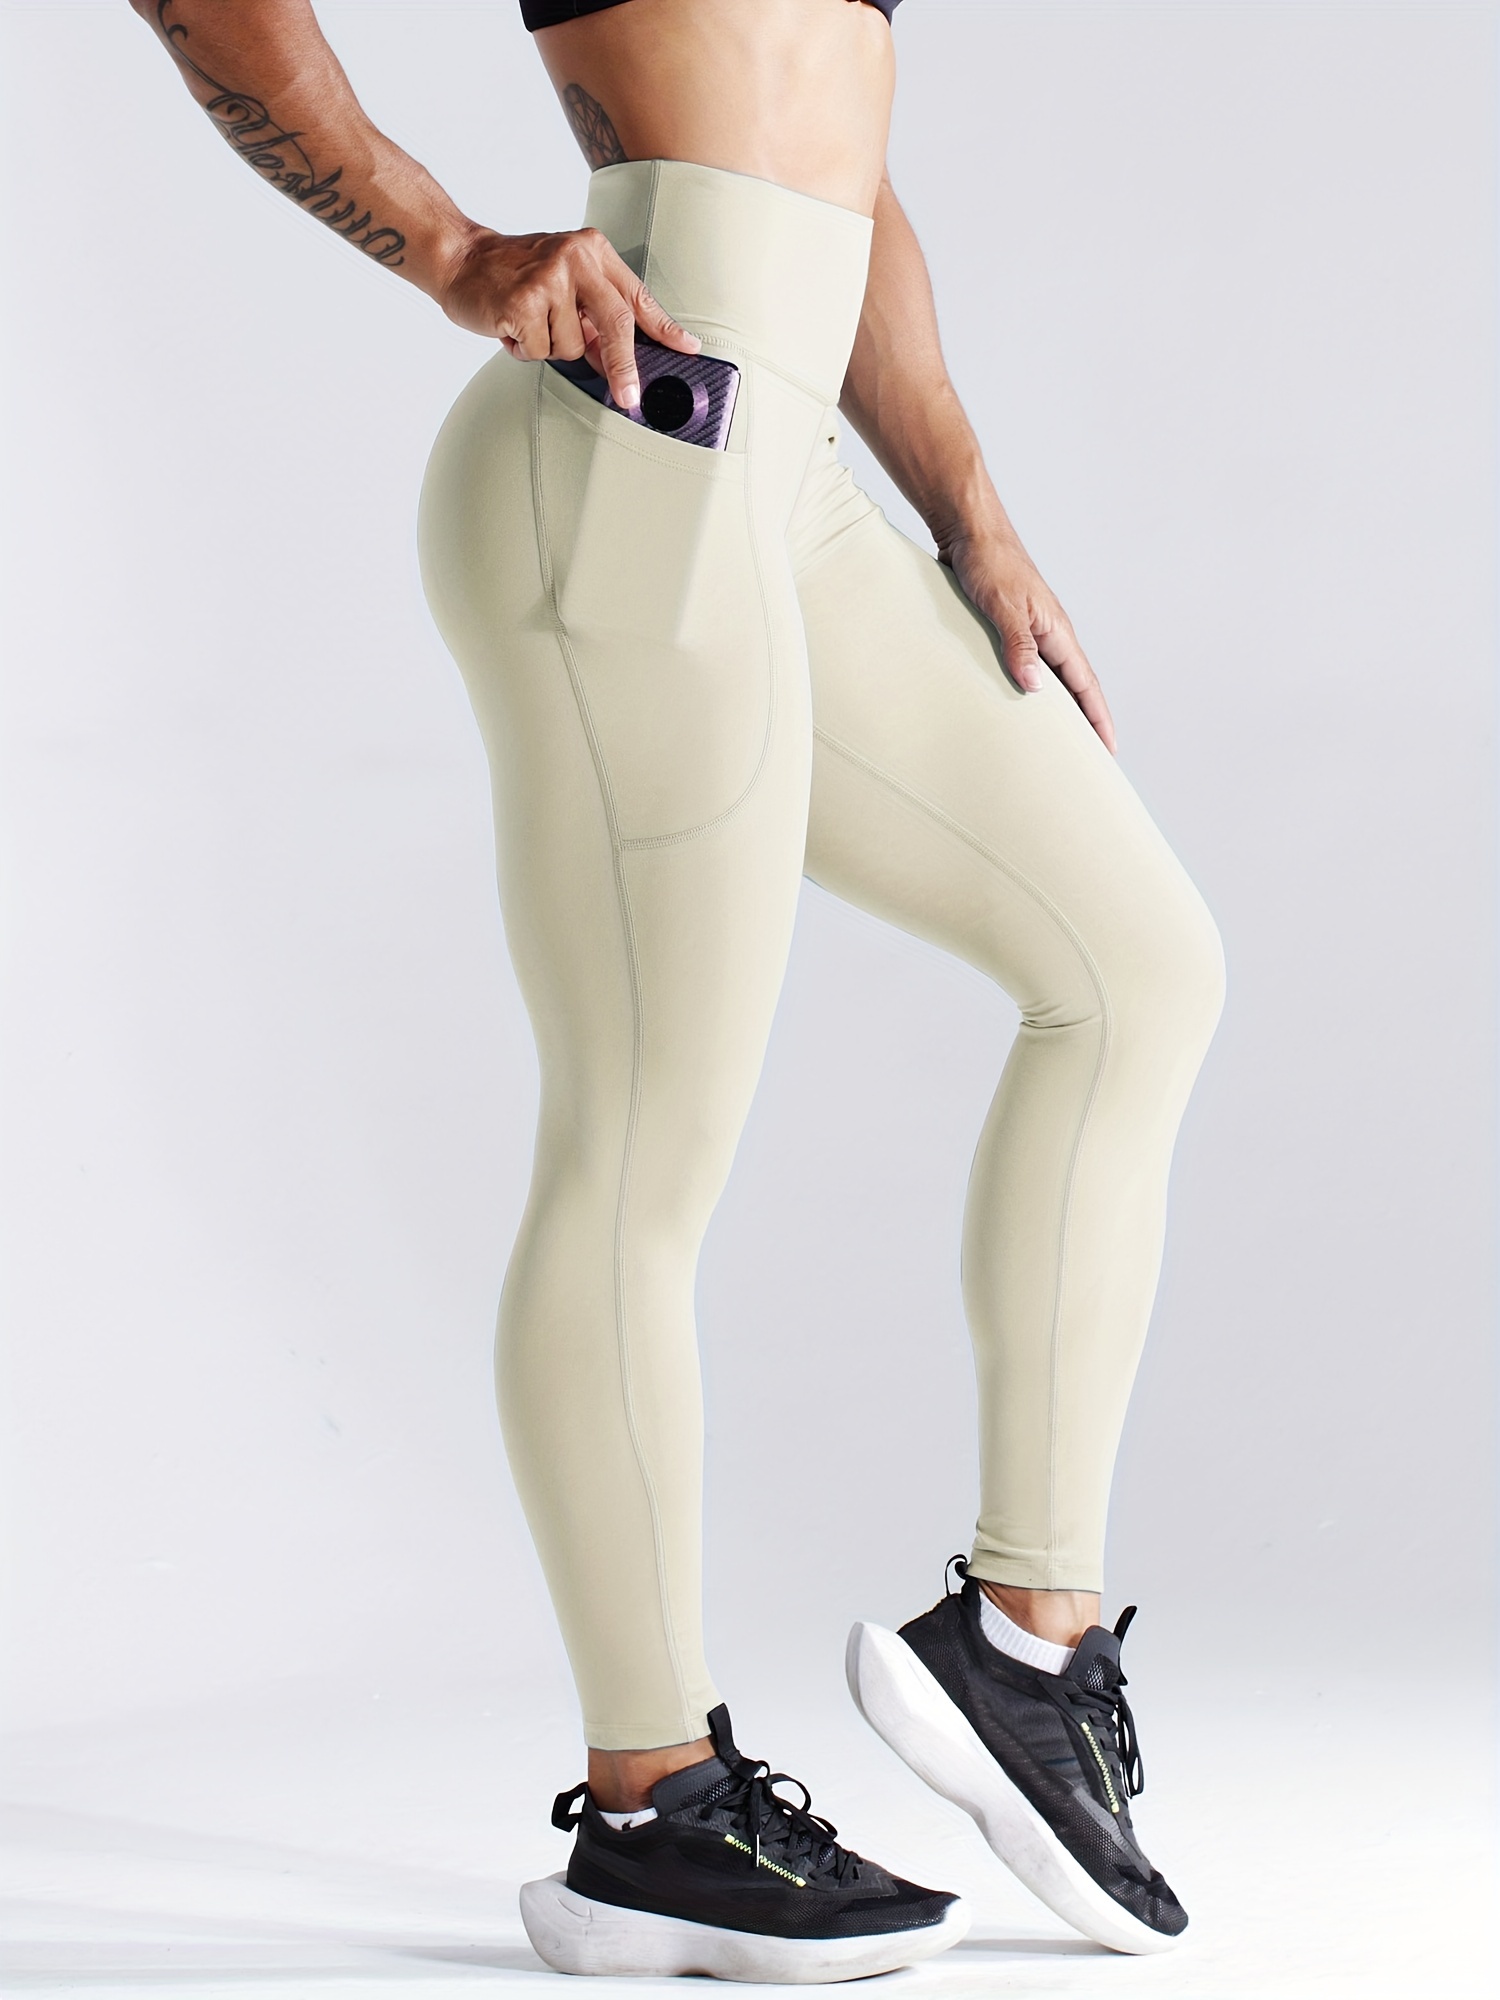 Womens Cream Yoga Leggings High Waist Gym Tights Solid Soft Athletic  Fitness Pants Workout Legging Slim Sweatpants